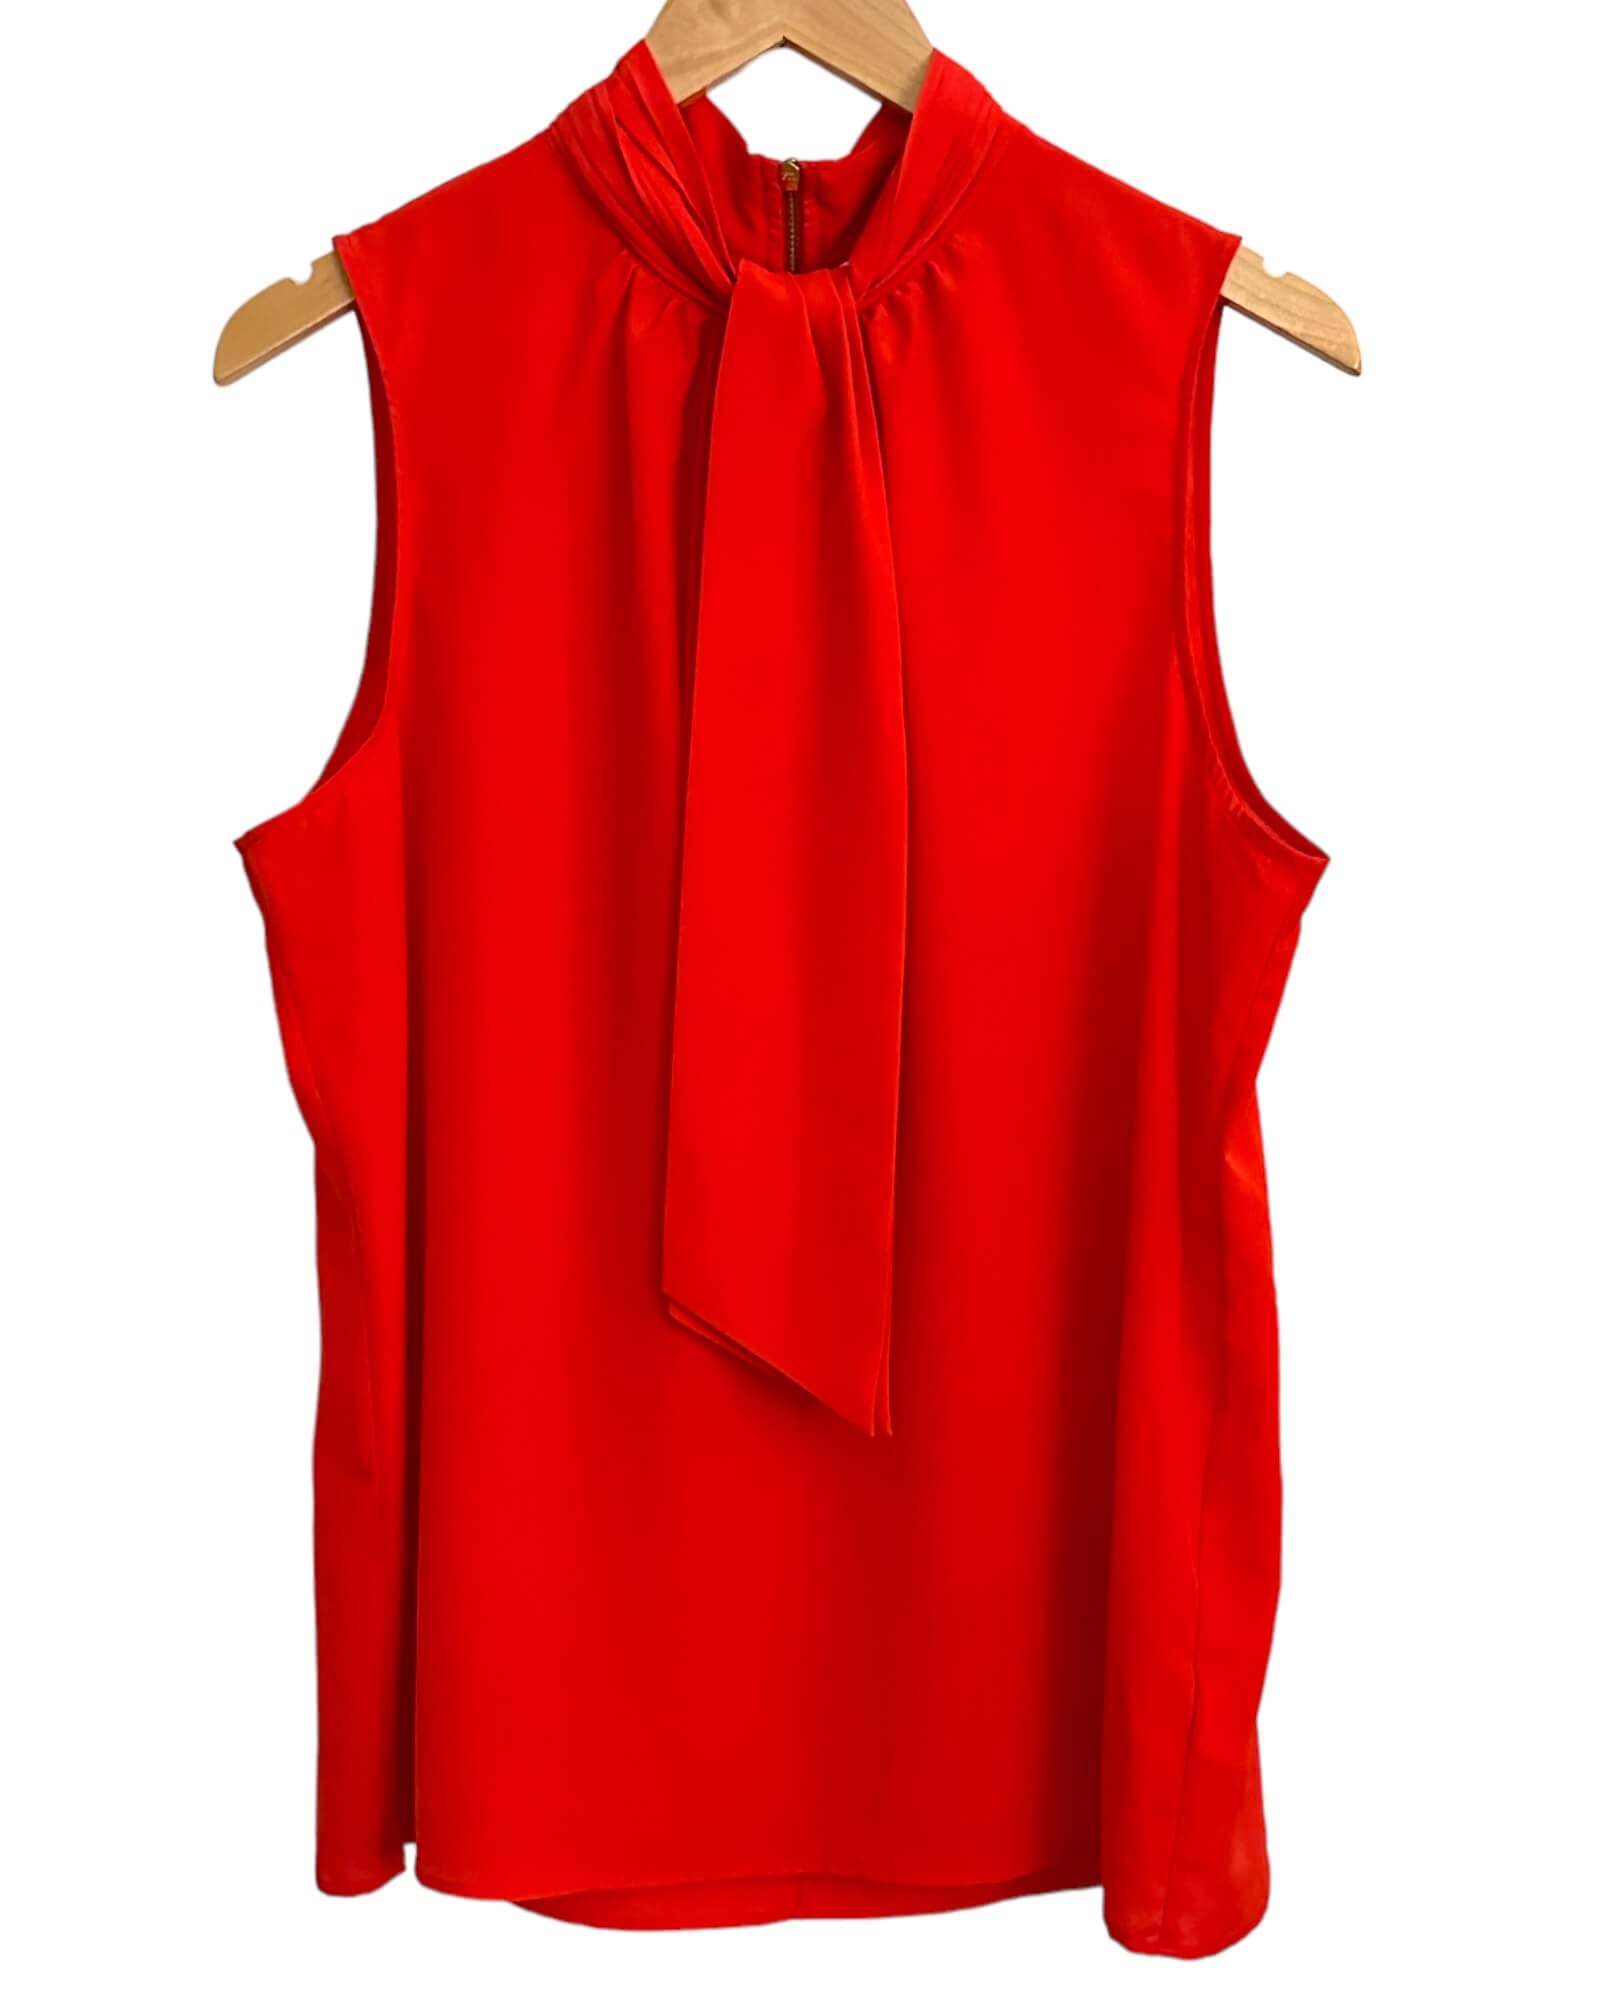 Warm Autumn MICHAEL KORS salsa red sleeveless sash blouse